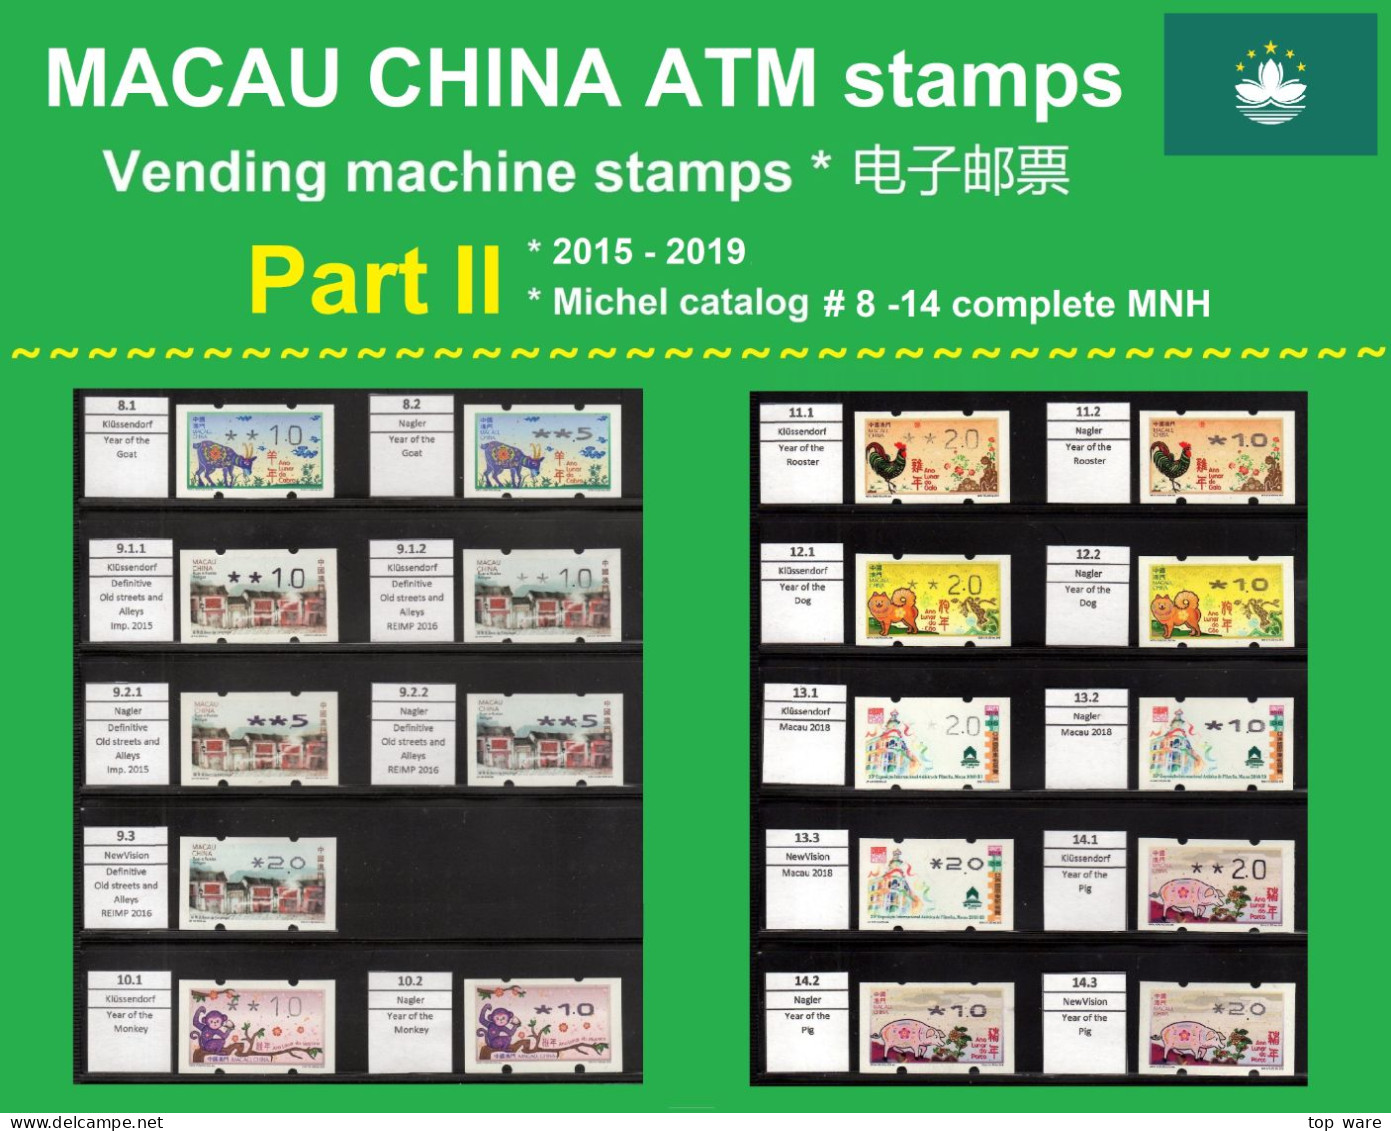 Macau China ATM Sammlung Part II / 2015-2019 MNH / Klussendorf Nagler Frama CVP Automatenmarken - Automaten